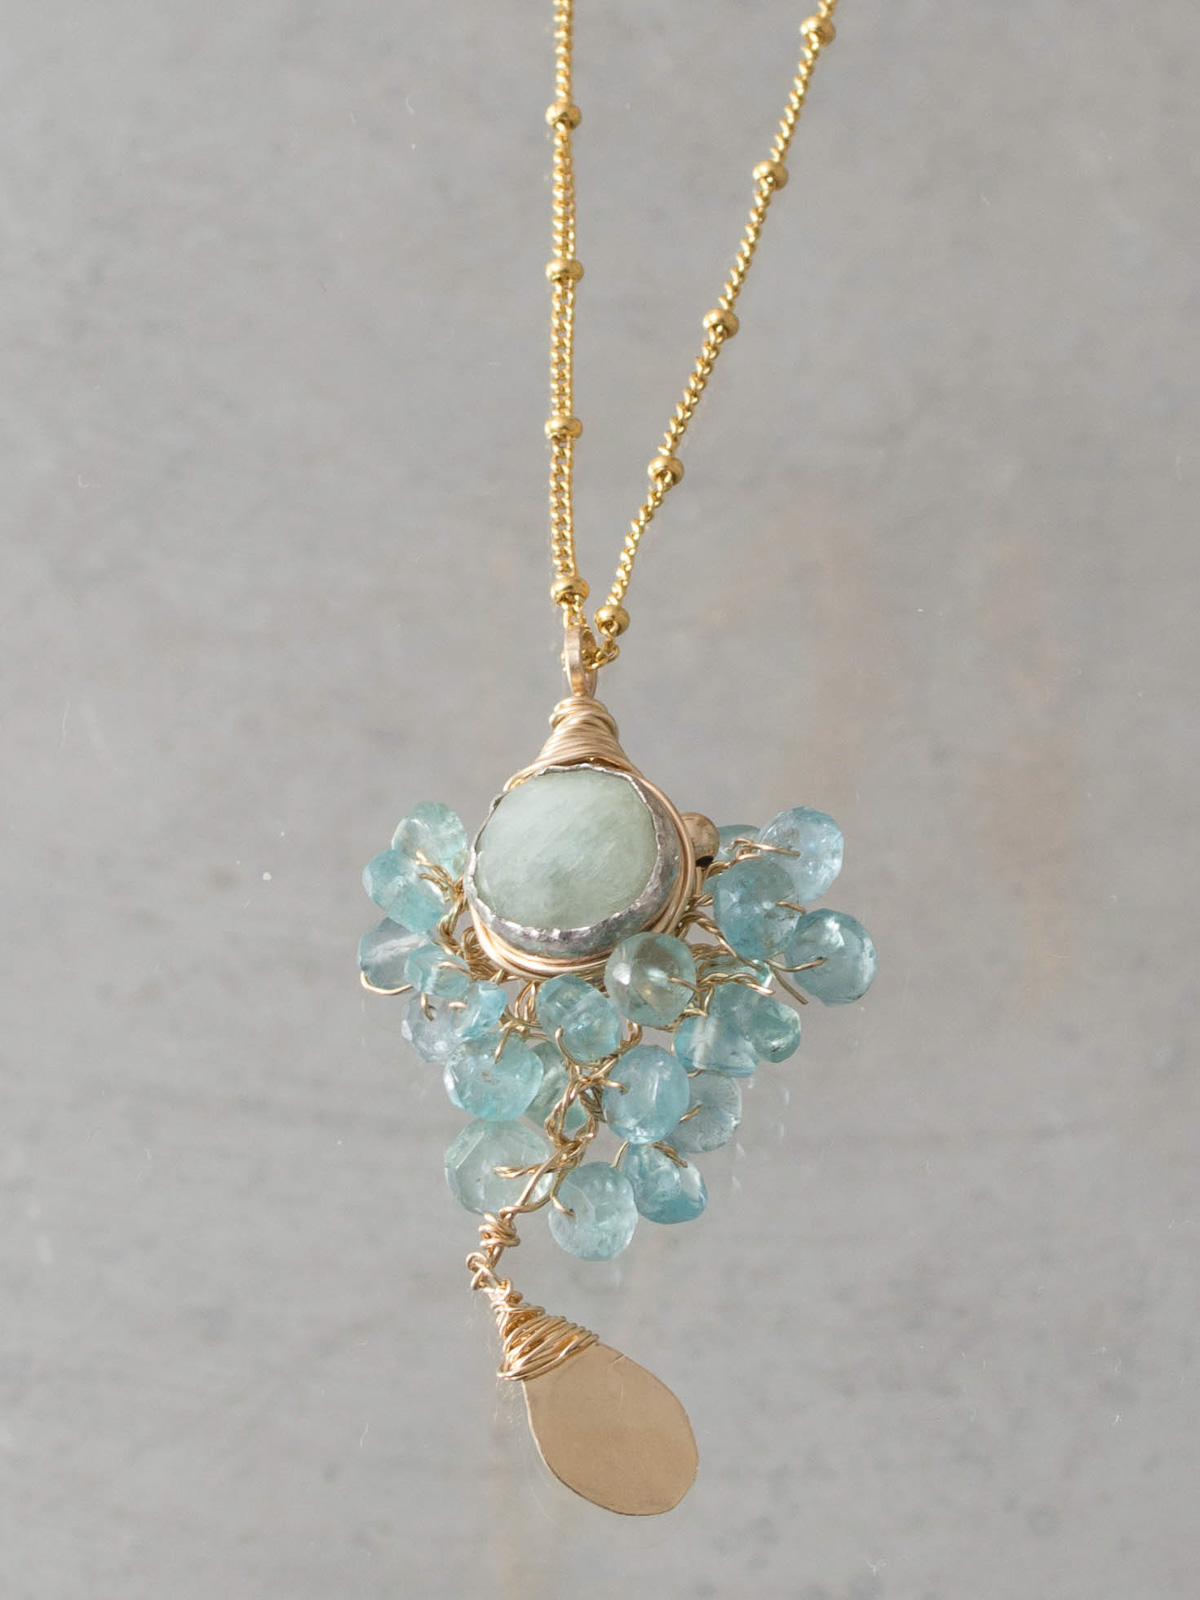 necklace Goddess aquamarine, apatite